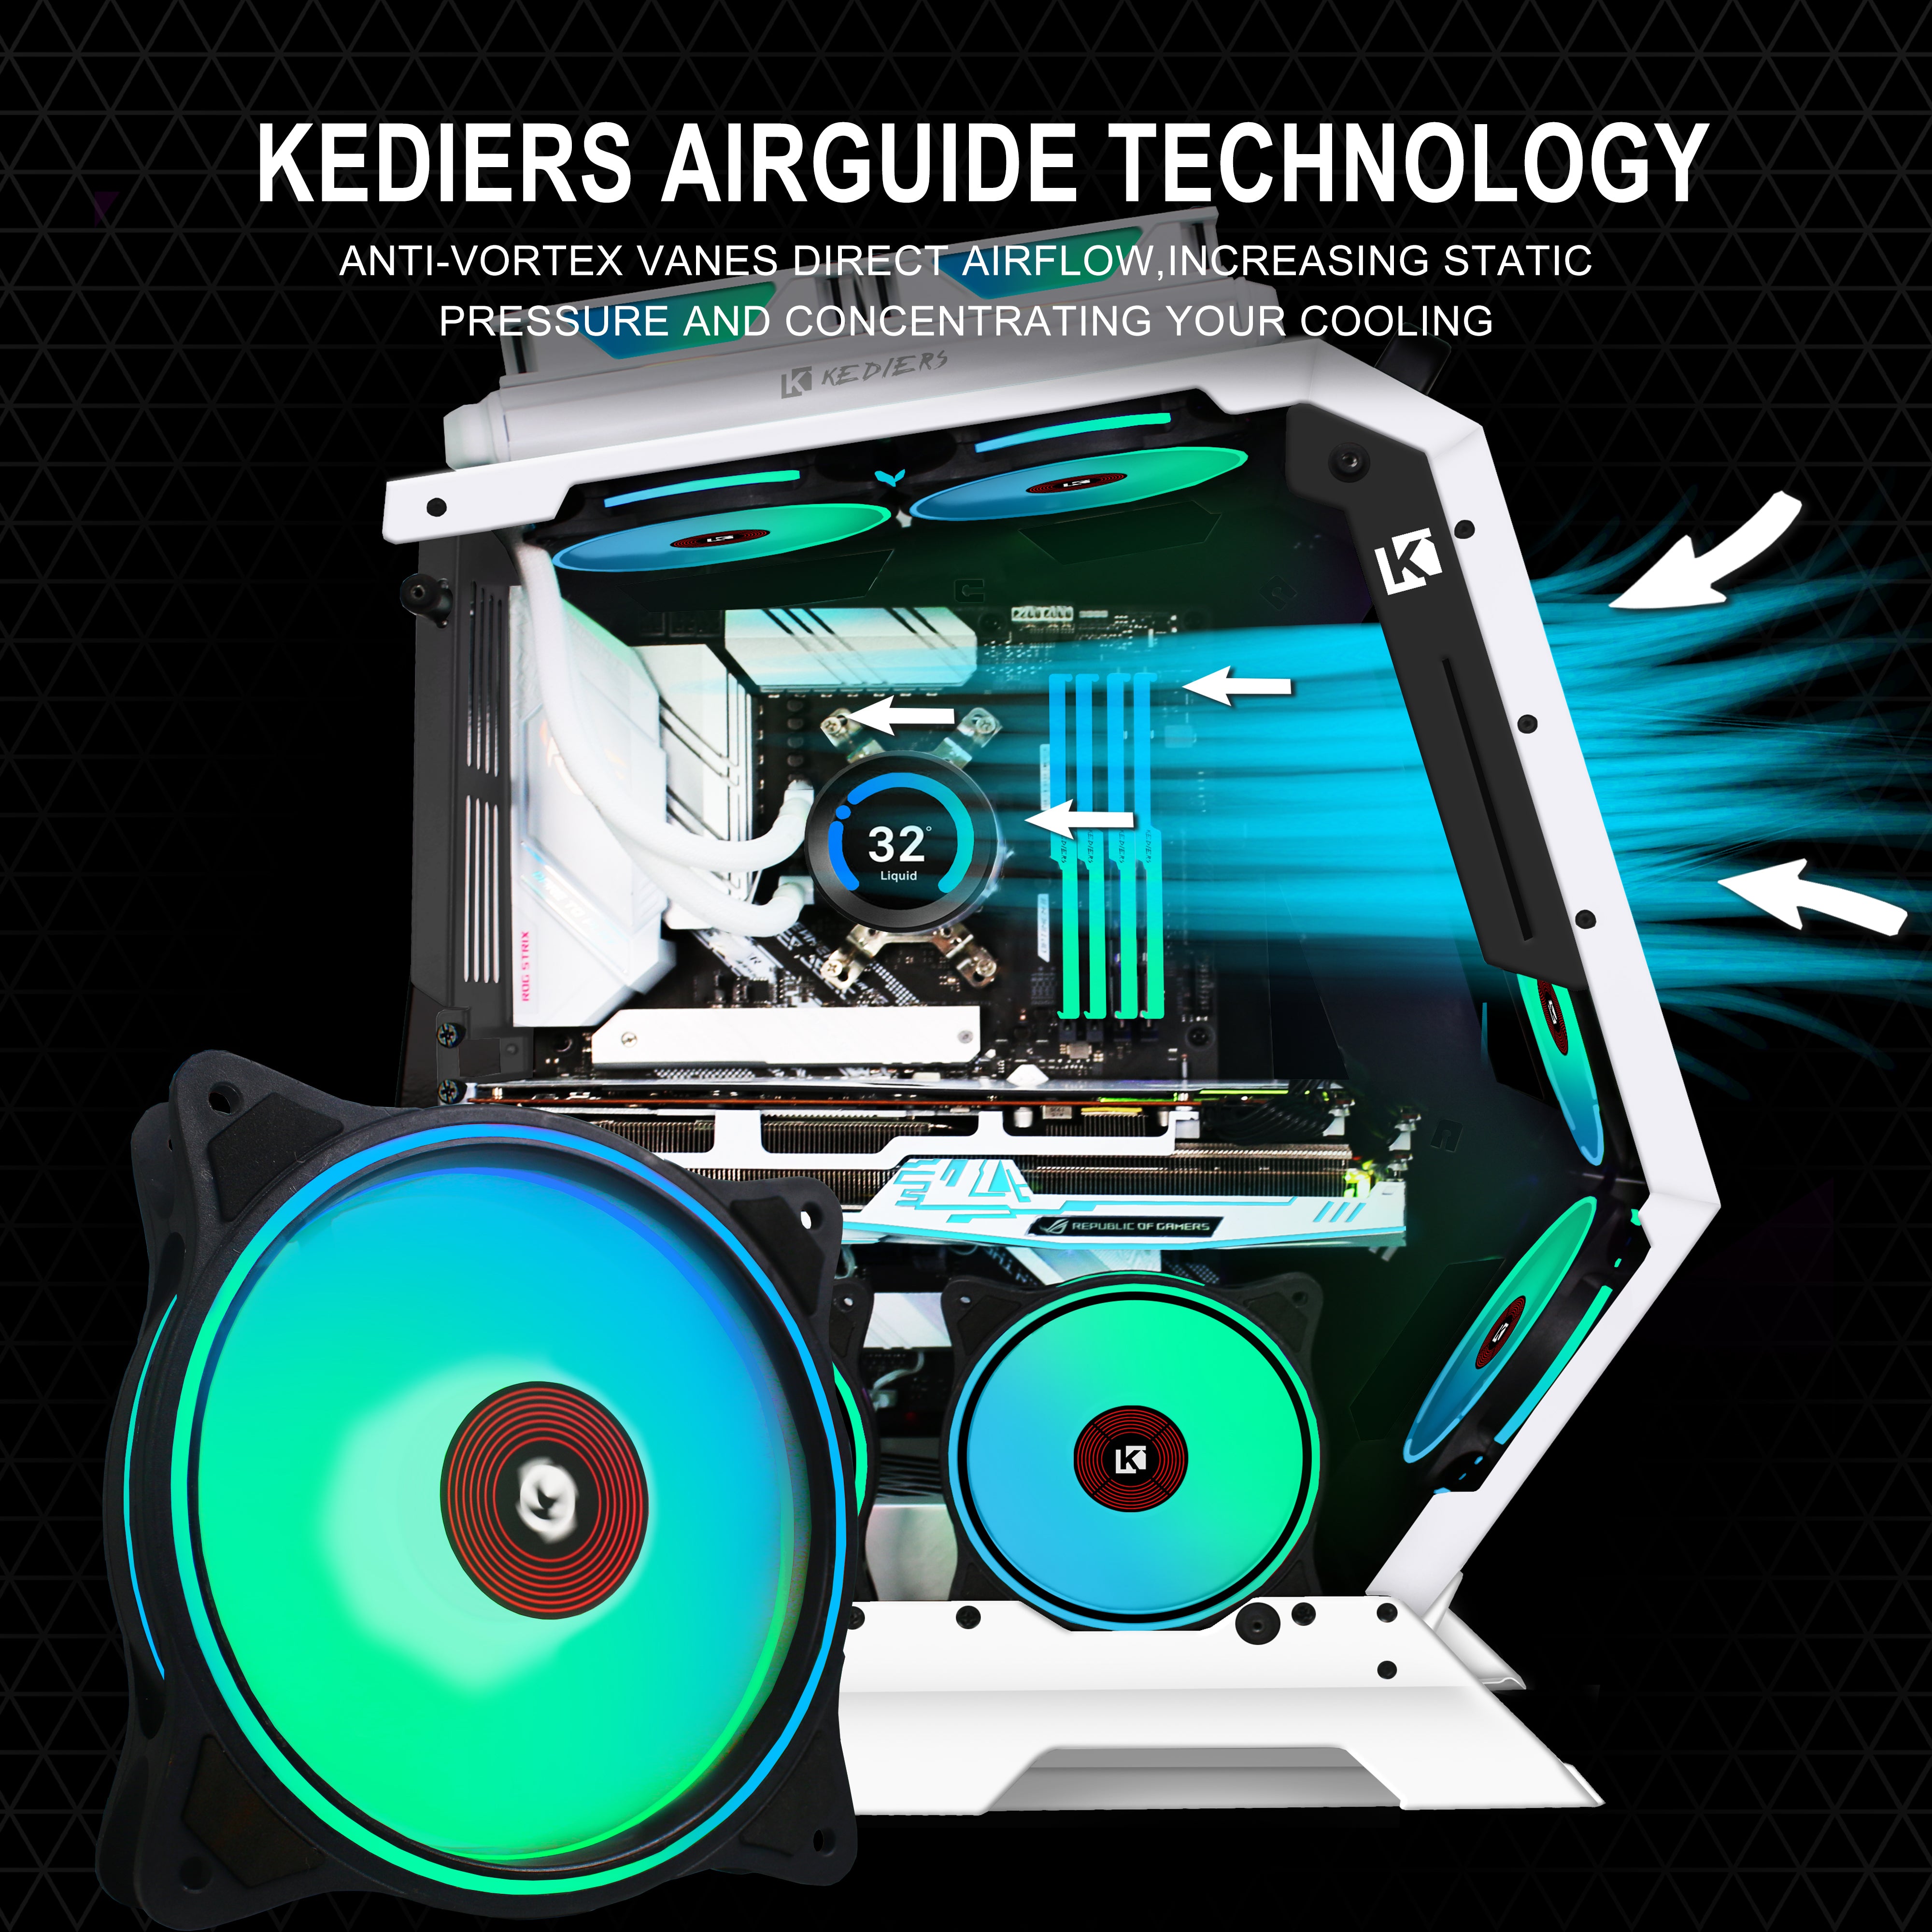 KEDIERS PC Case Pre-Install 6 PWM ARGB Cases Fans, ATX Mid Tower